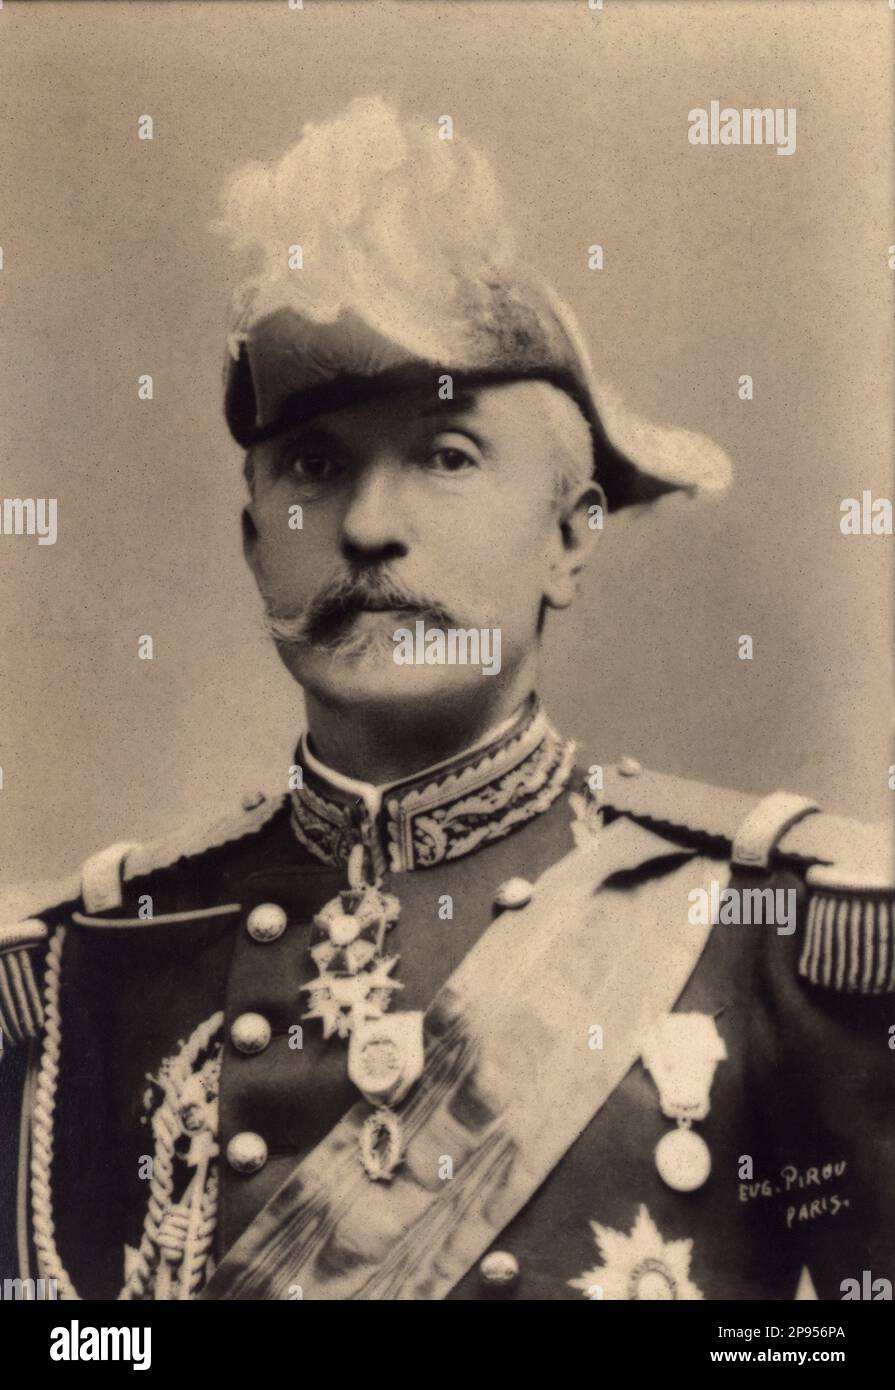 1890 c , FRANKREICH : der französische Politiker General RAOUL DE MOUTON DE BOISDEFFRE ( 1839 - 1919 ) . Foto Eugene Pirou , Paris .- POLITICA - POLITIC - FRANKREICH - FRANCIA - foto Storiche - foto storica - Portrait - ritratto - Baffi - Schnurrbart - Militäruniform - uniforme divisa militare - medaglie - decorazioni - Hut - cappello - feluca ---- Archivio GBB Stockfoto